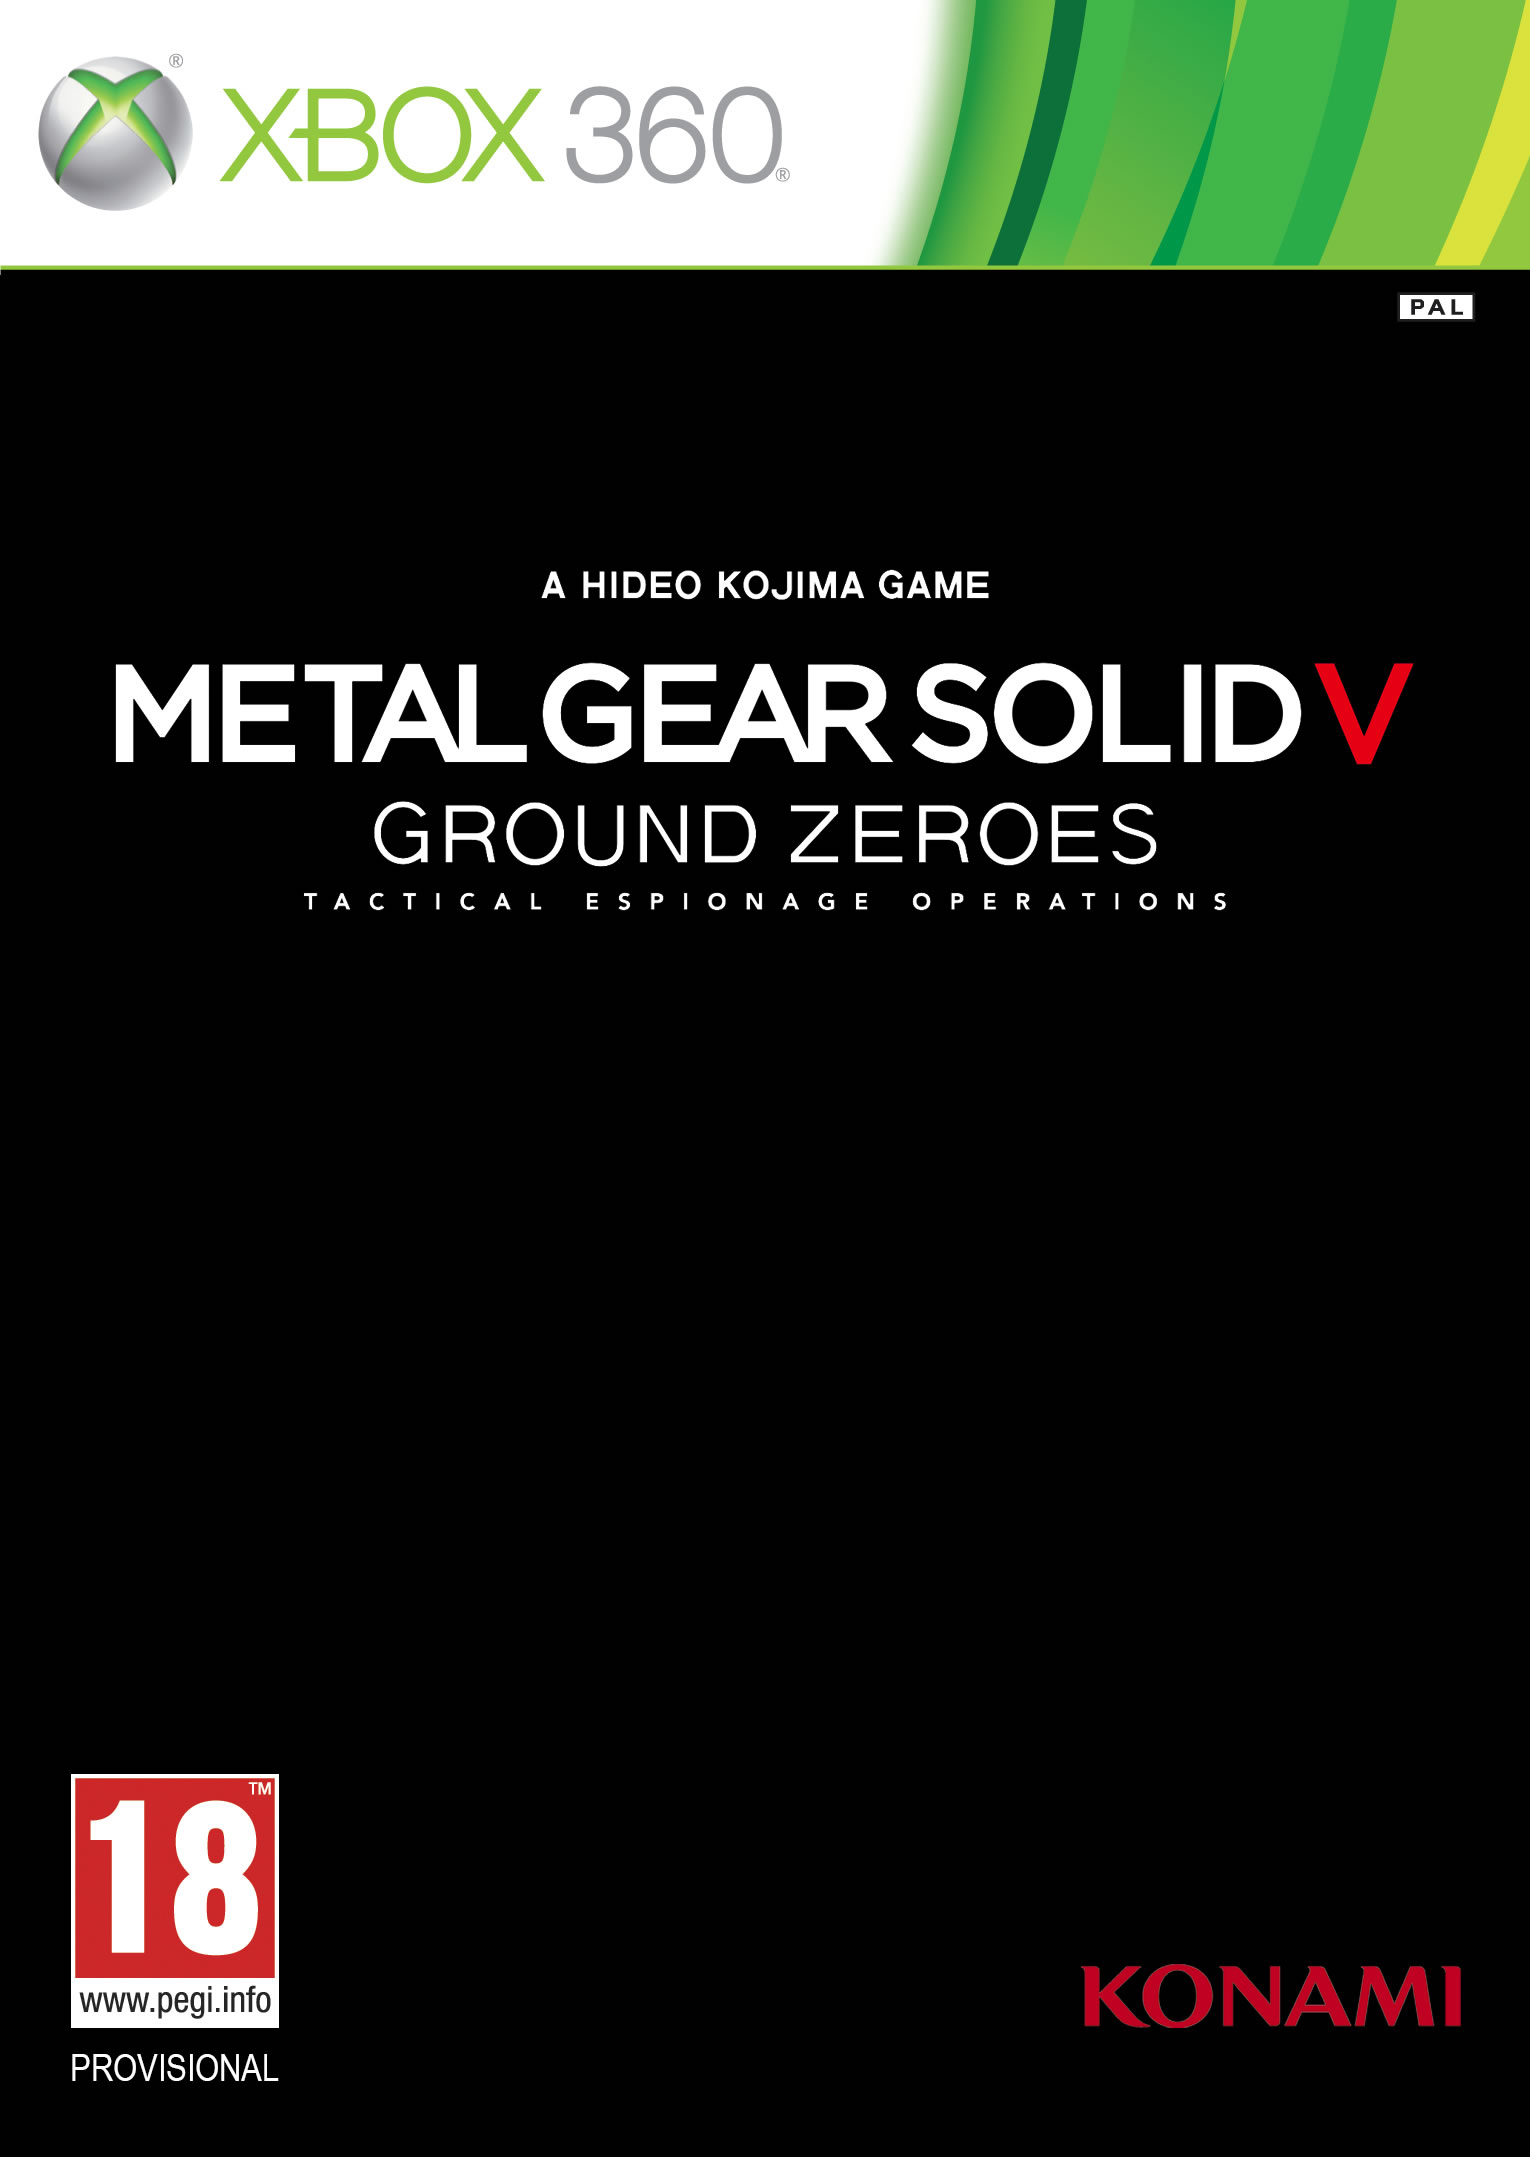 Metal Gear Solid V : Ground Zeroes clora au printemps 2014